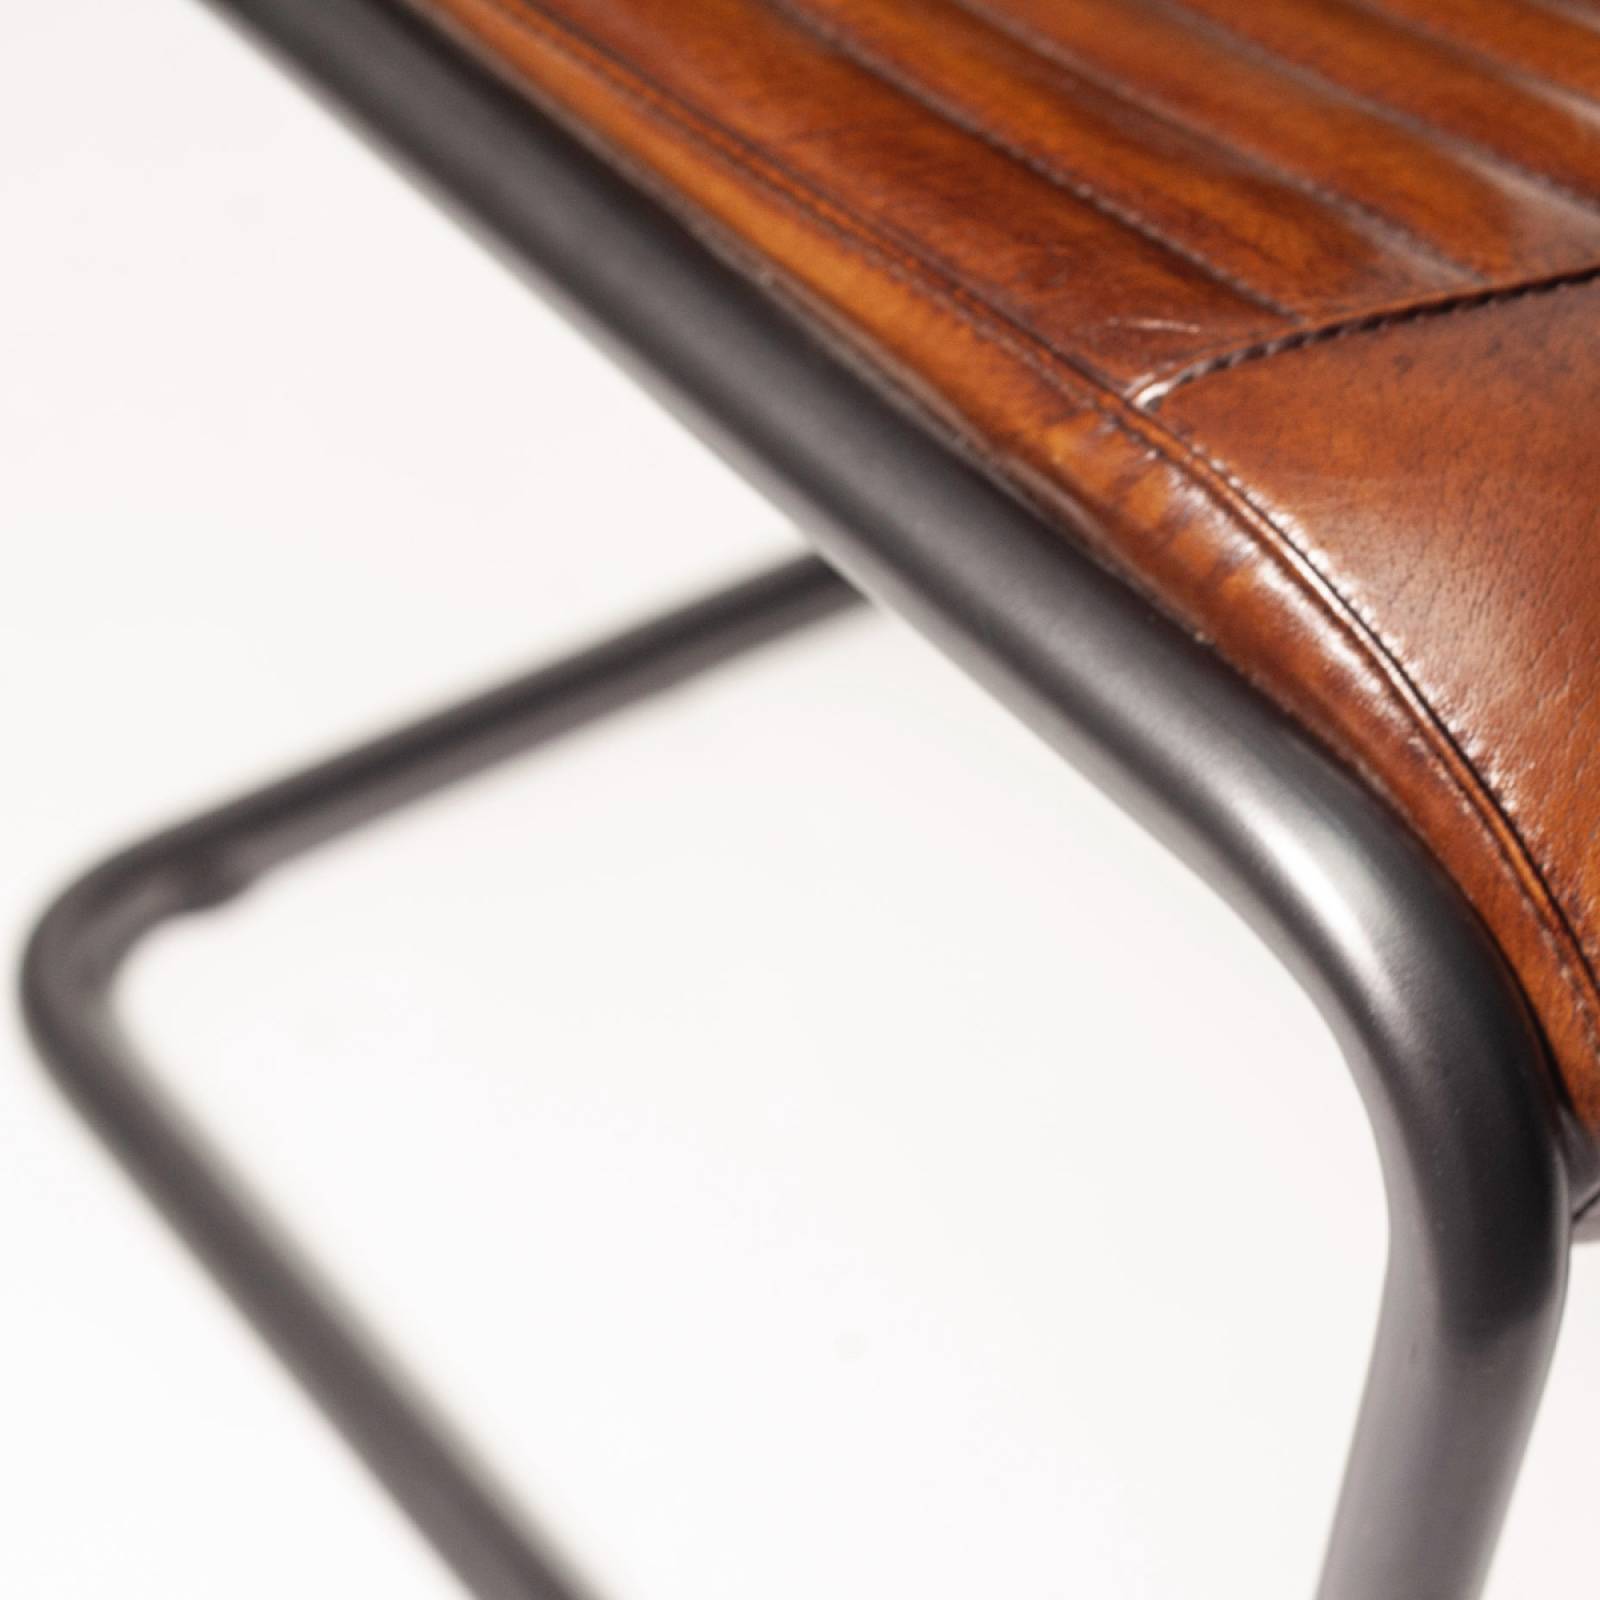 Bauhaus Cantilever Leather & Steel Chair thumbnails